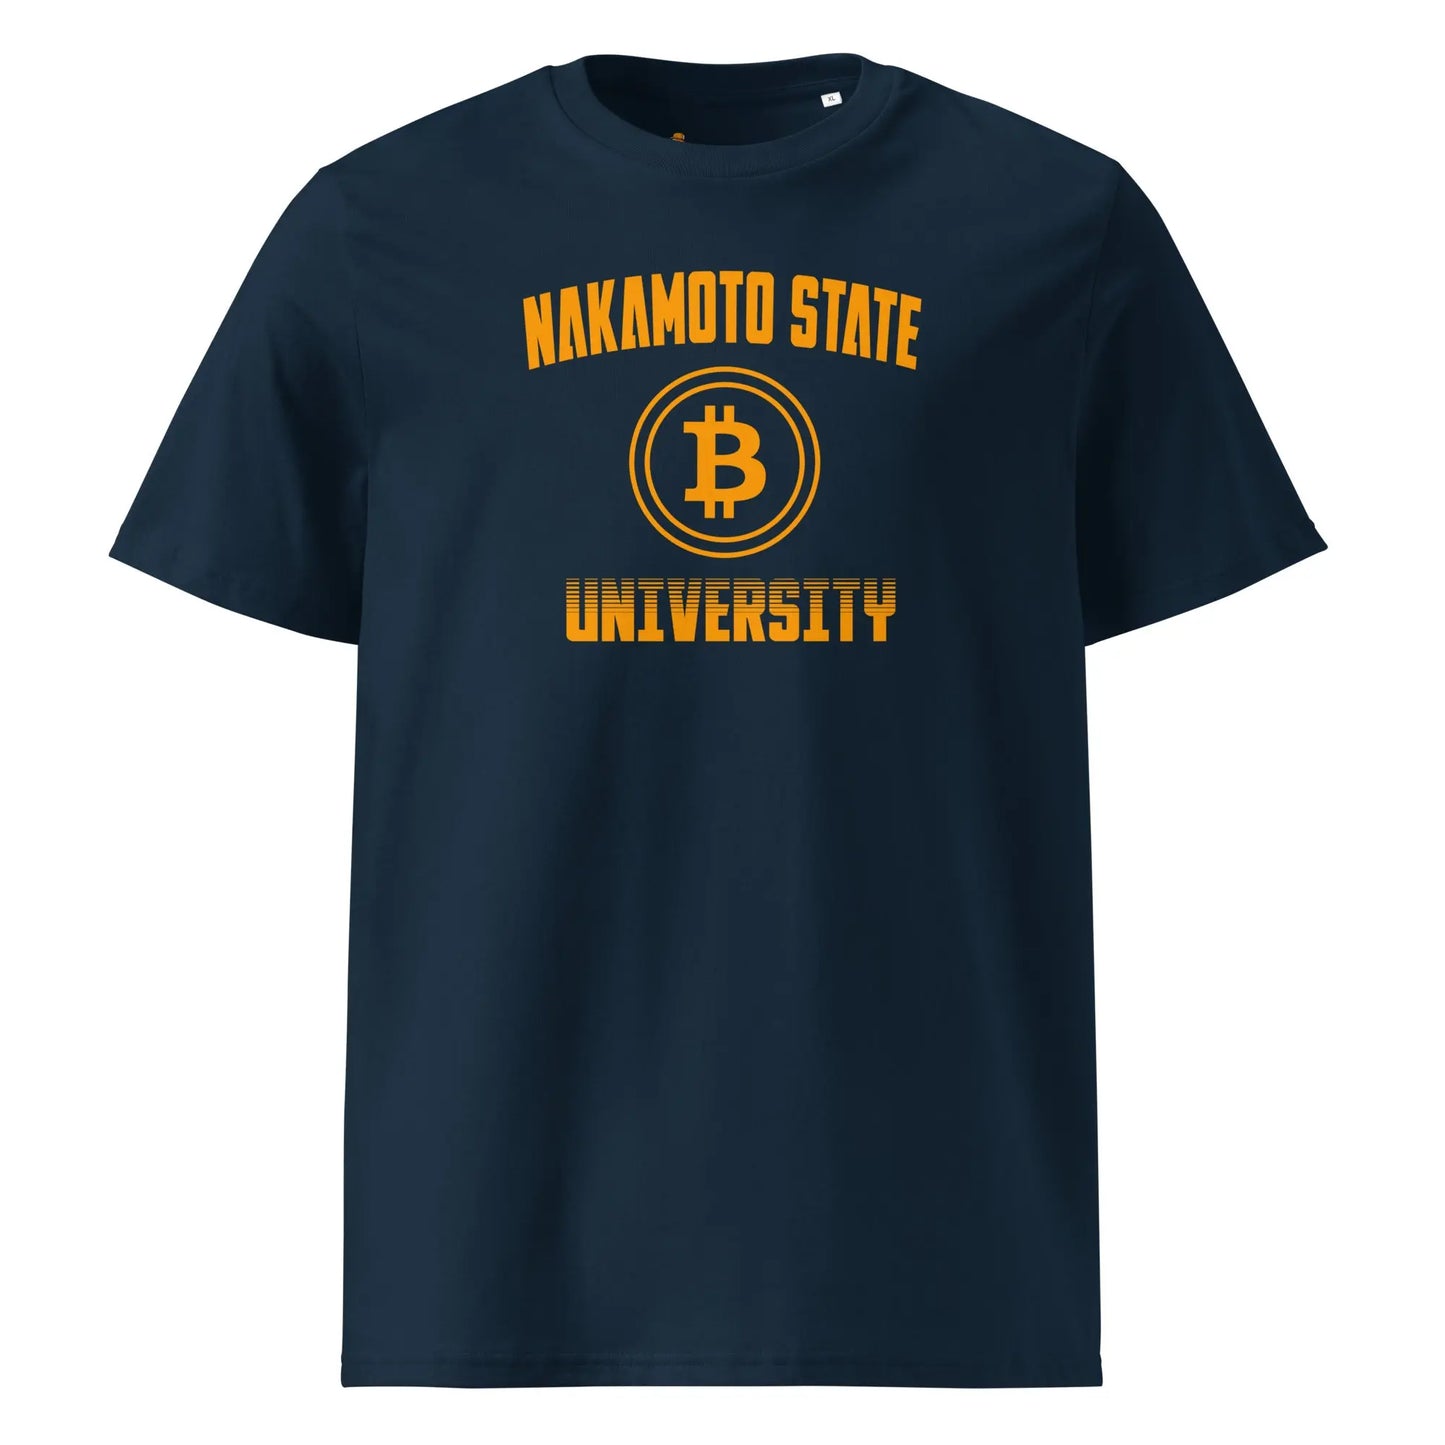 Nakamoto State University - Premium Unisex Organic Cotton Bitcoin T-shirt Store of ValueNakamoto State University - Premium Unisex Organic Cotton Bitcoin T-shirt Black Color French Blue Color